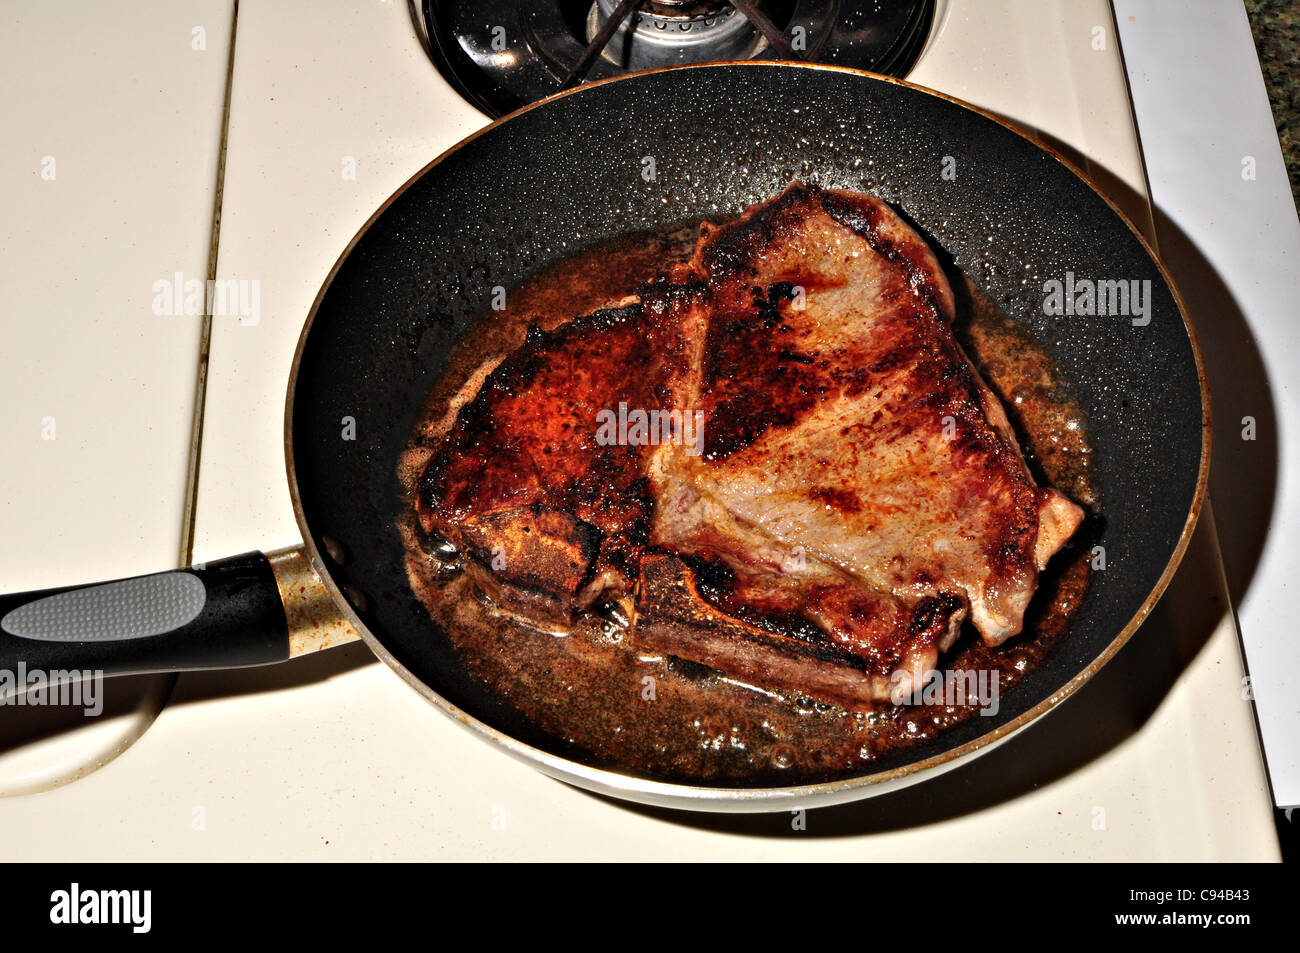 A t-bone steak is cooking in a frying pan. Stock Photo